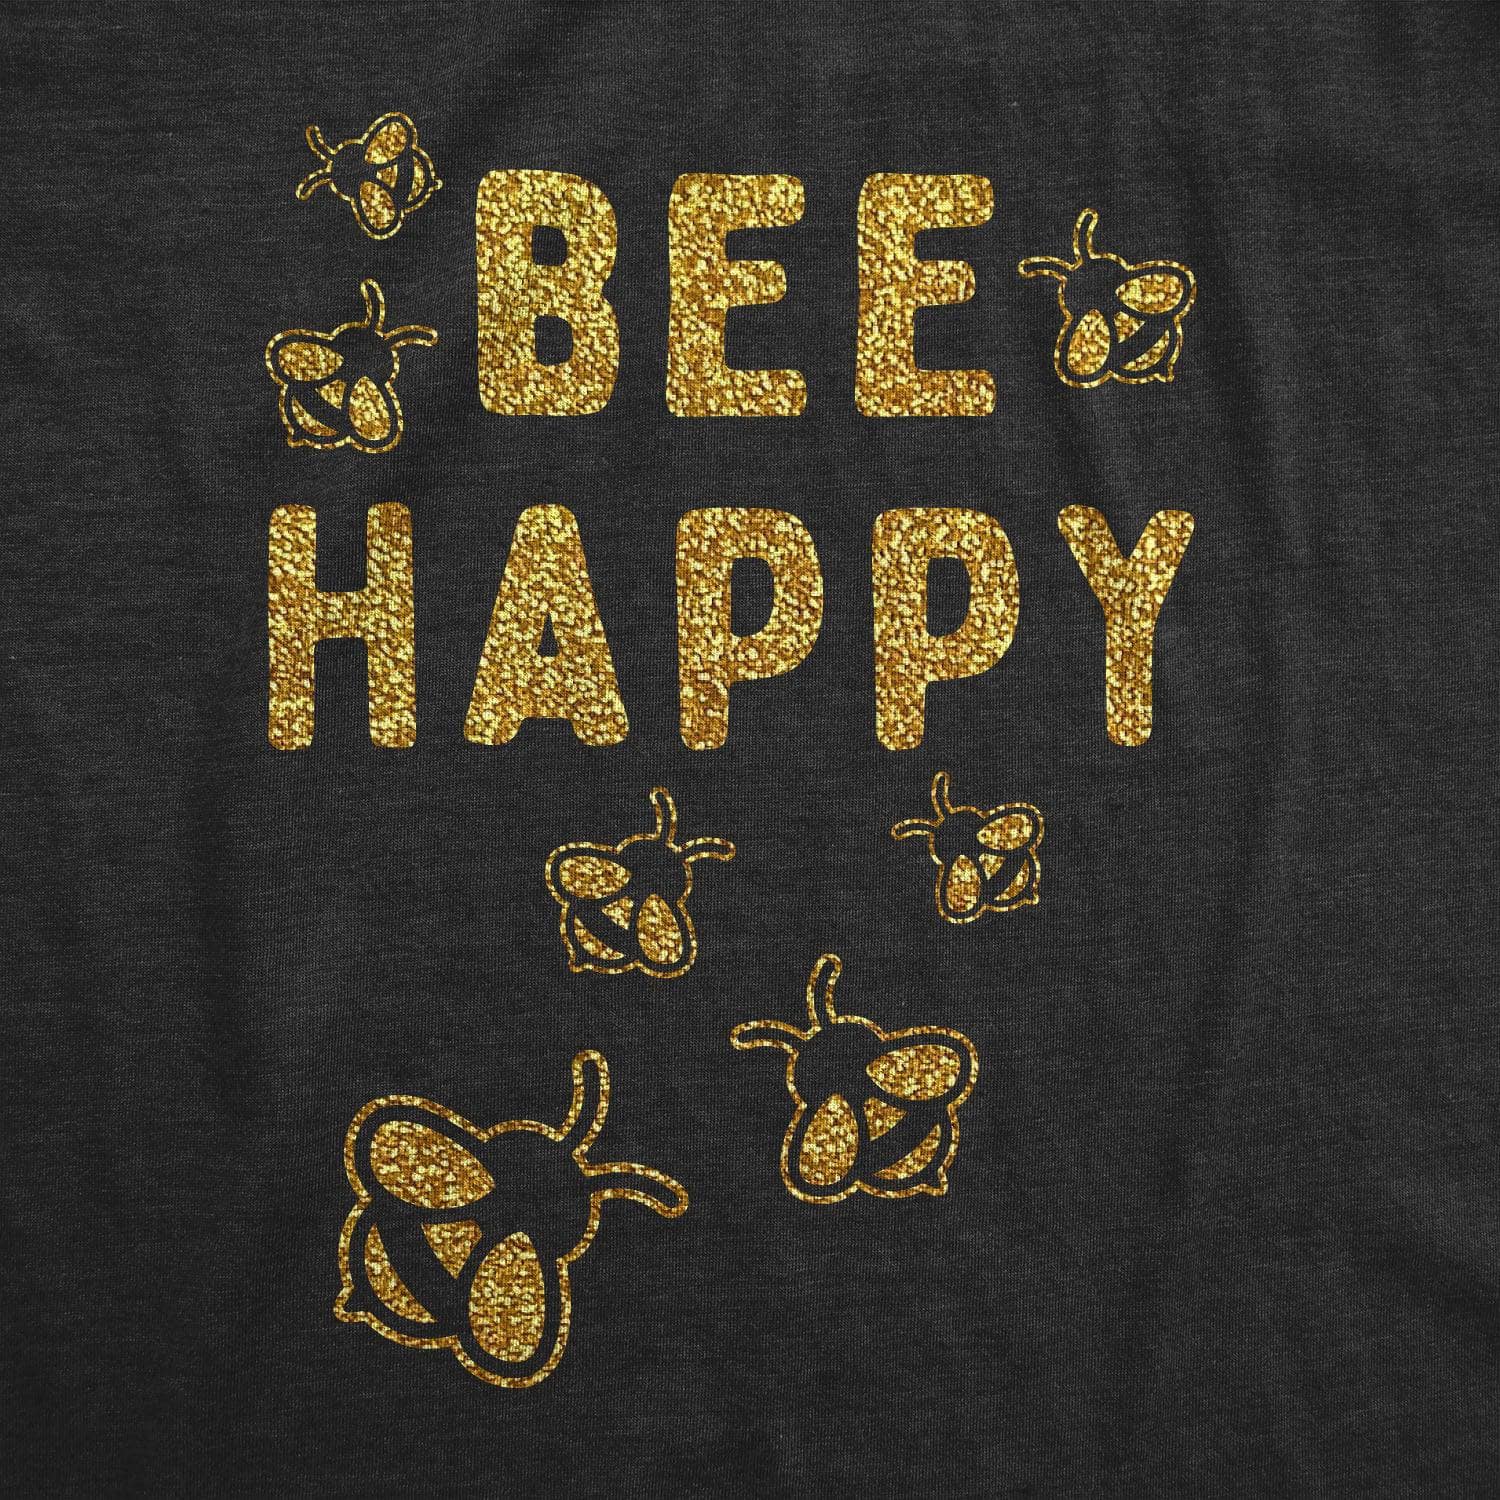 Bee Happy Glitter Women's Tshirt  -  Crazy Dog T-Shirts